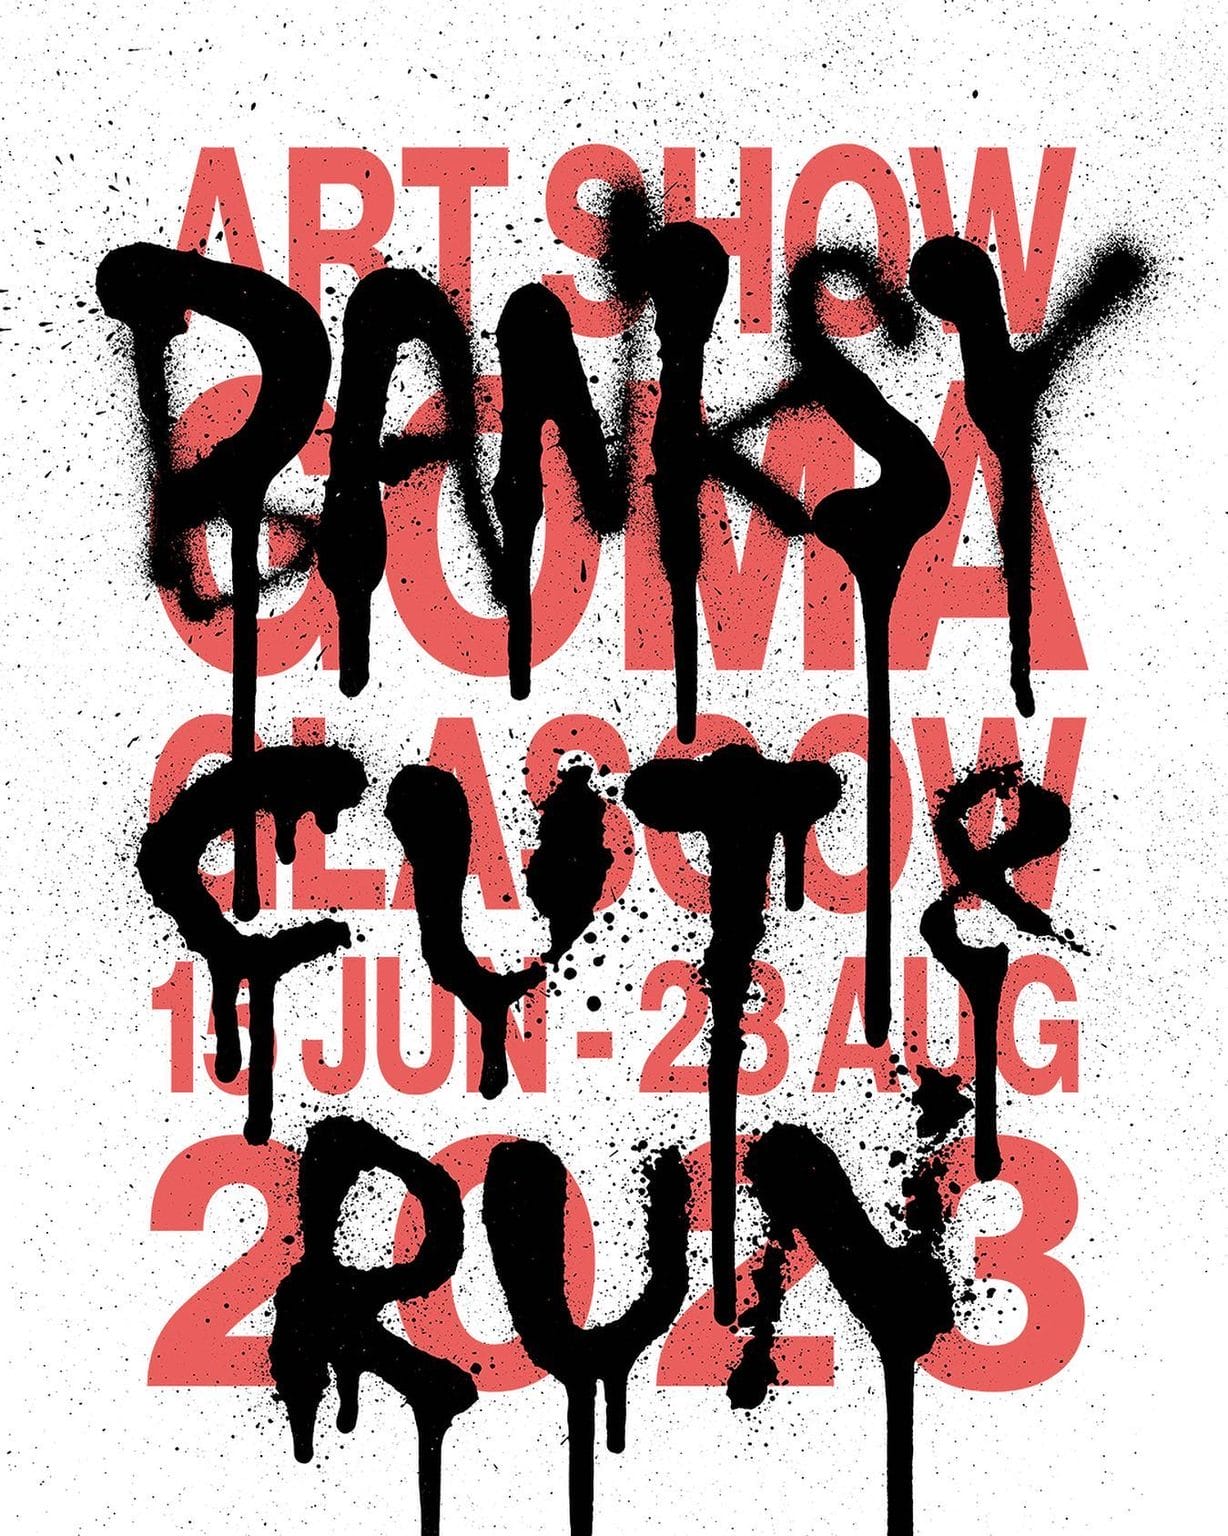 Banksy Cut and run